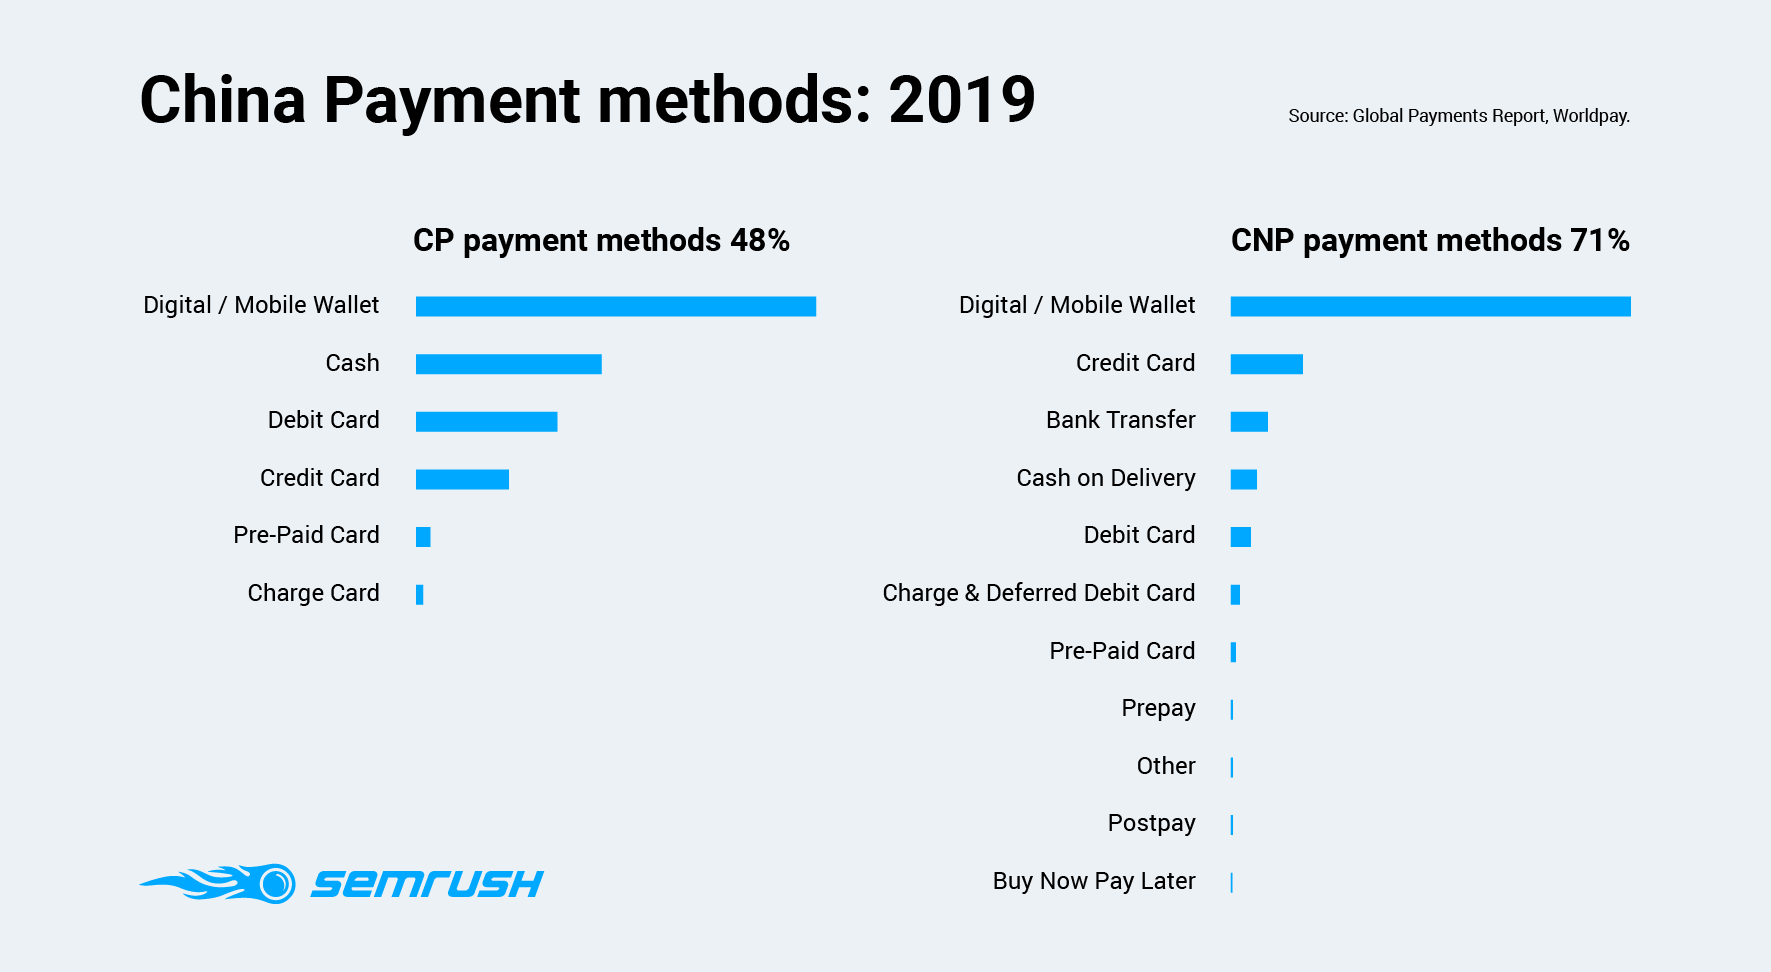 China Payment methods